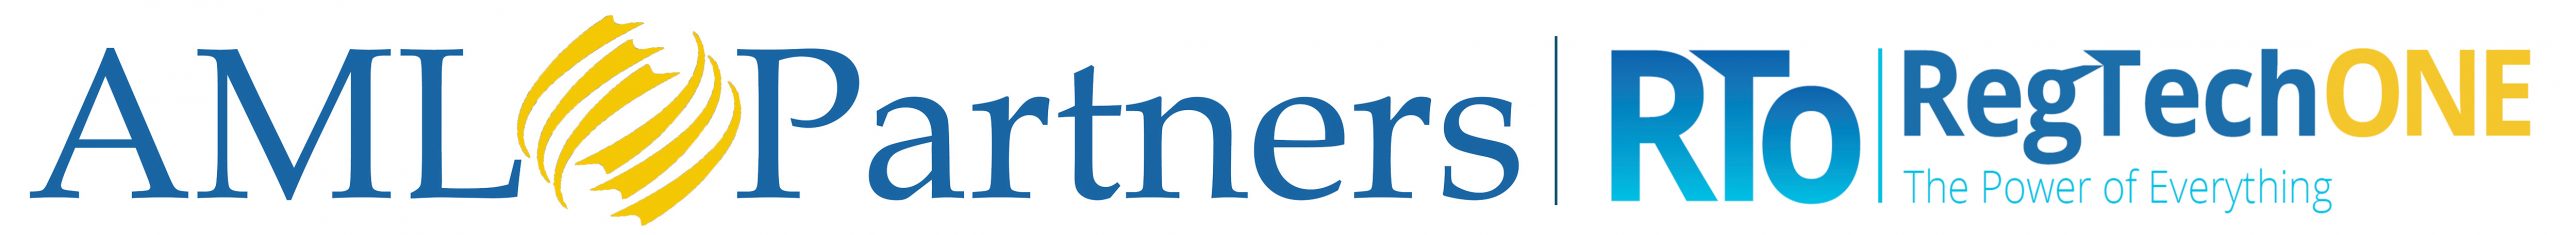 Logos of AML Partners, RegTechONE, and RTO (the initials of RegTechONE)